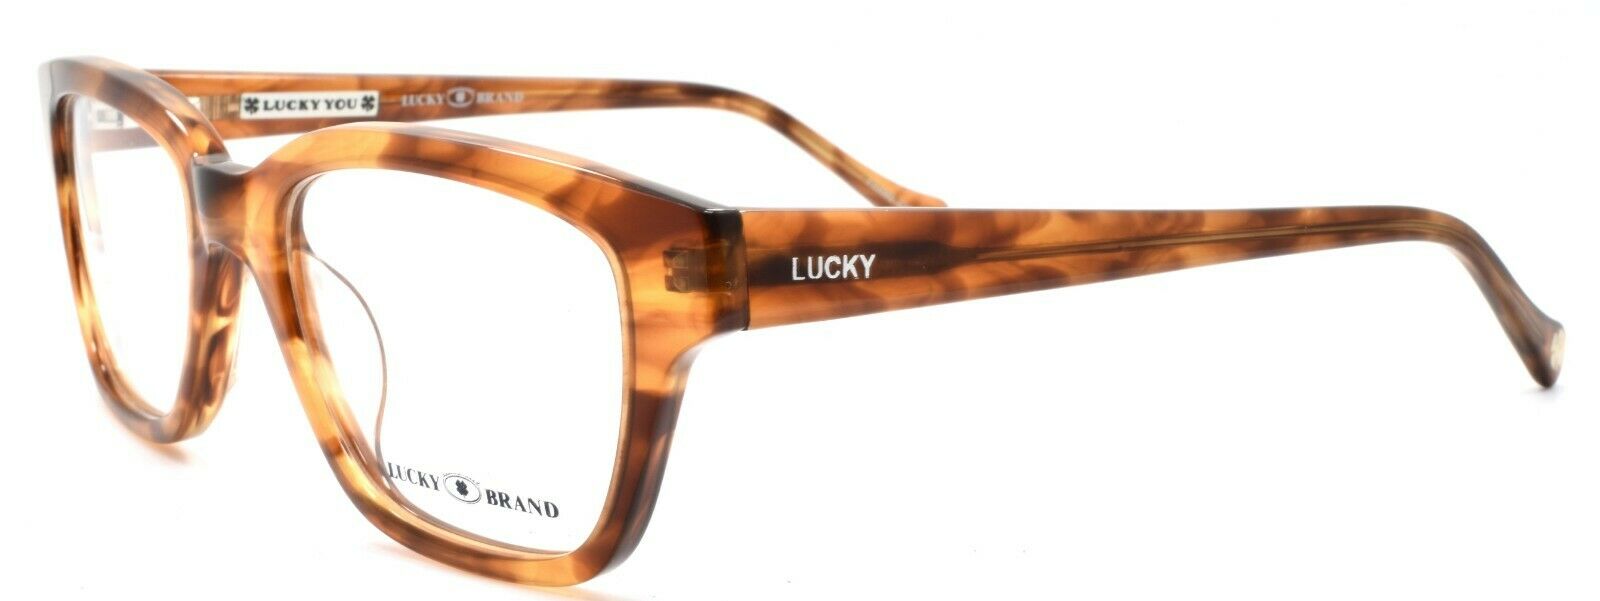 1-LUCKY BRAND Venturer UF Men's Eyeglasses Frames 50-19-145 Brown + CASE-751286249286-IKSpecs